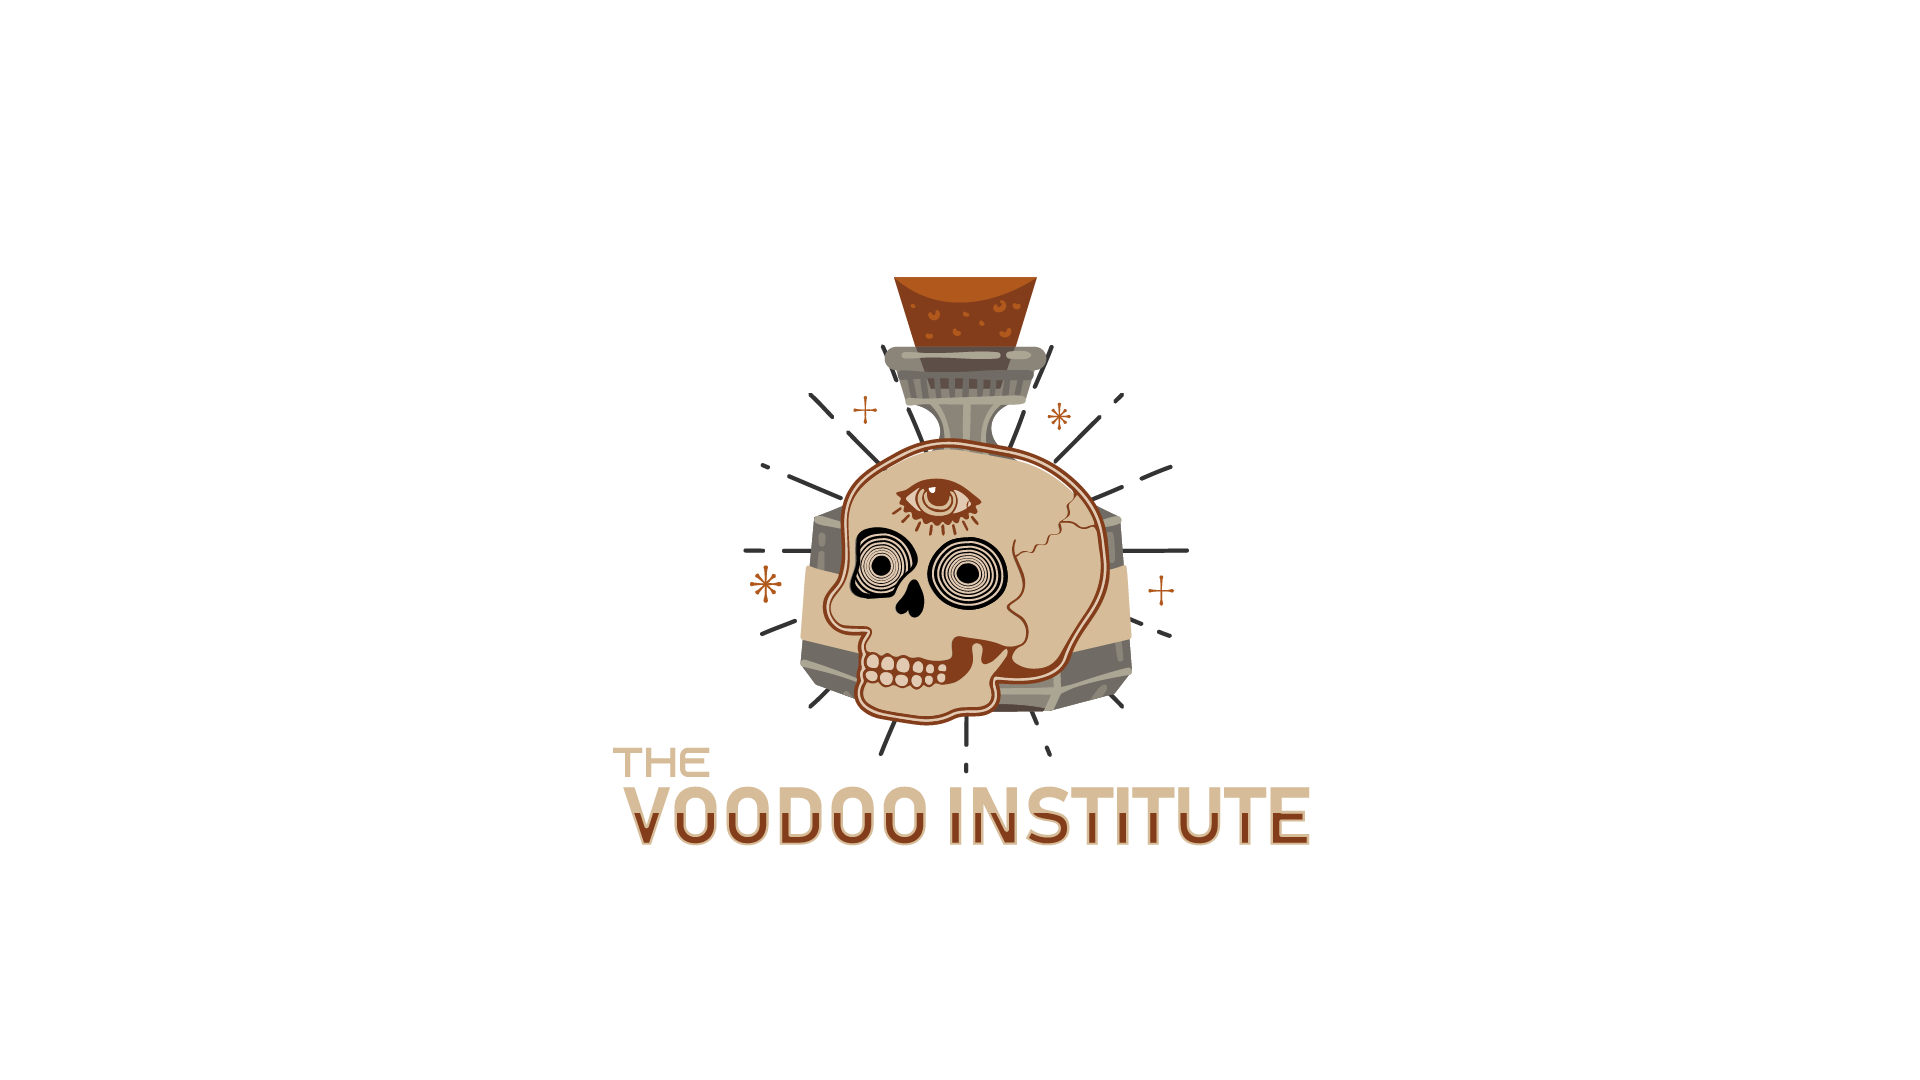 The Voodoo Institute